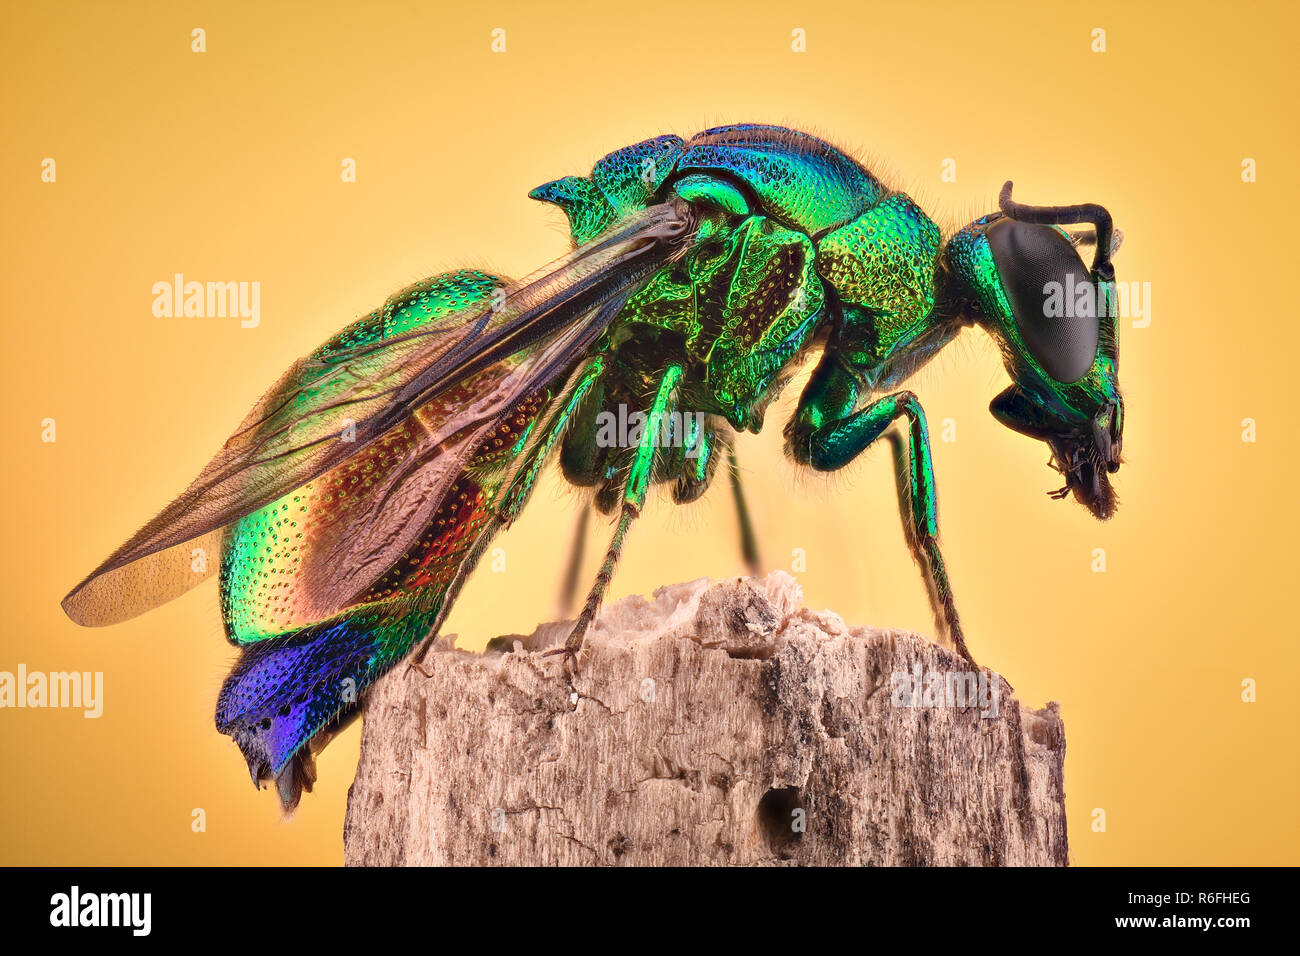 Extreme magnification - Cuckoo wasp Stock Photo